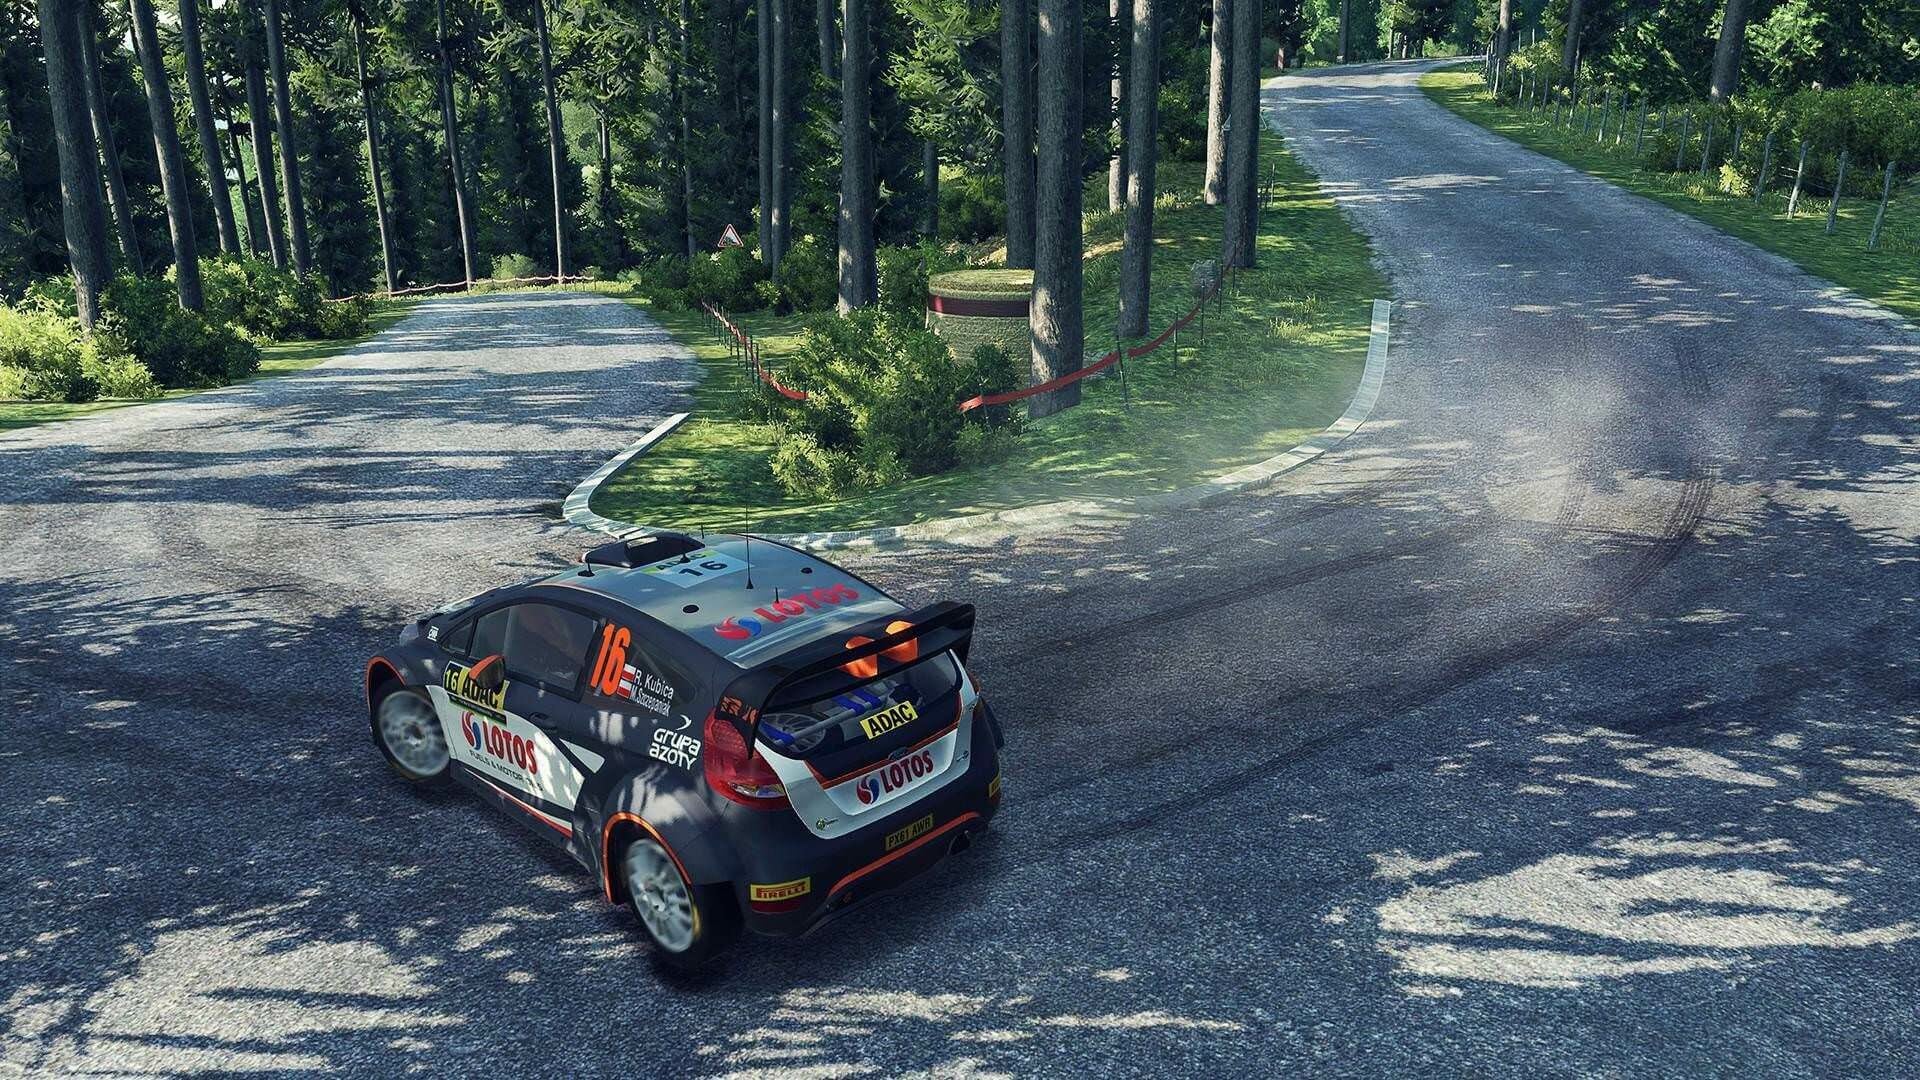 WRC 5 - Season Pass